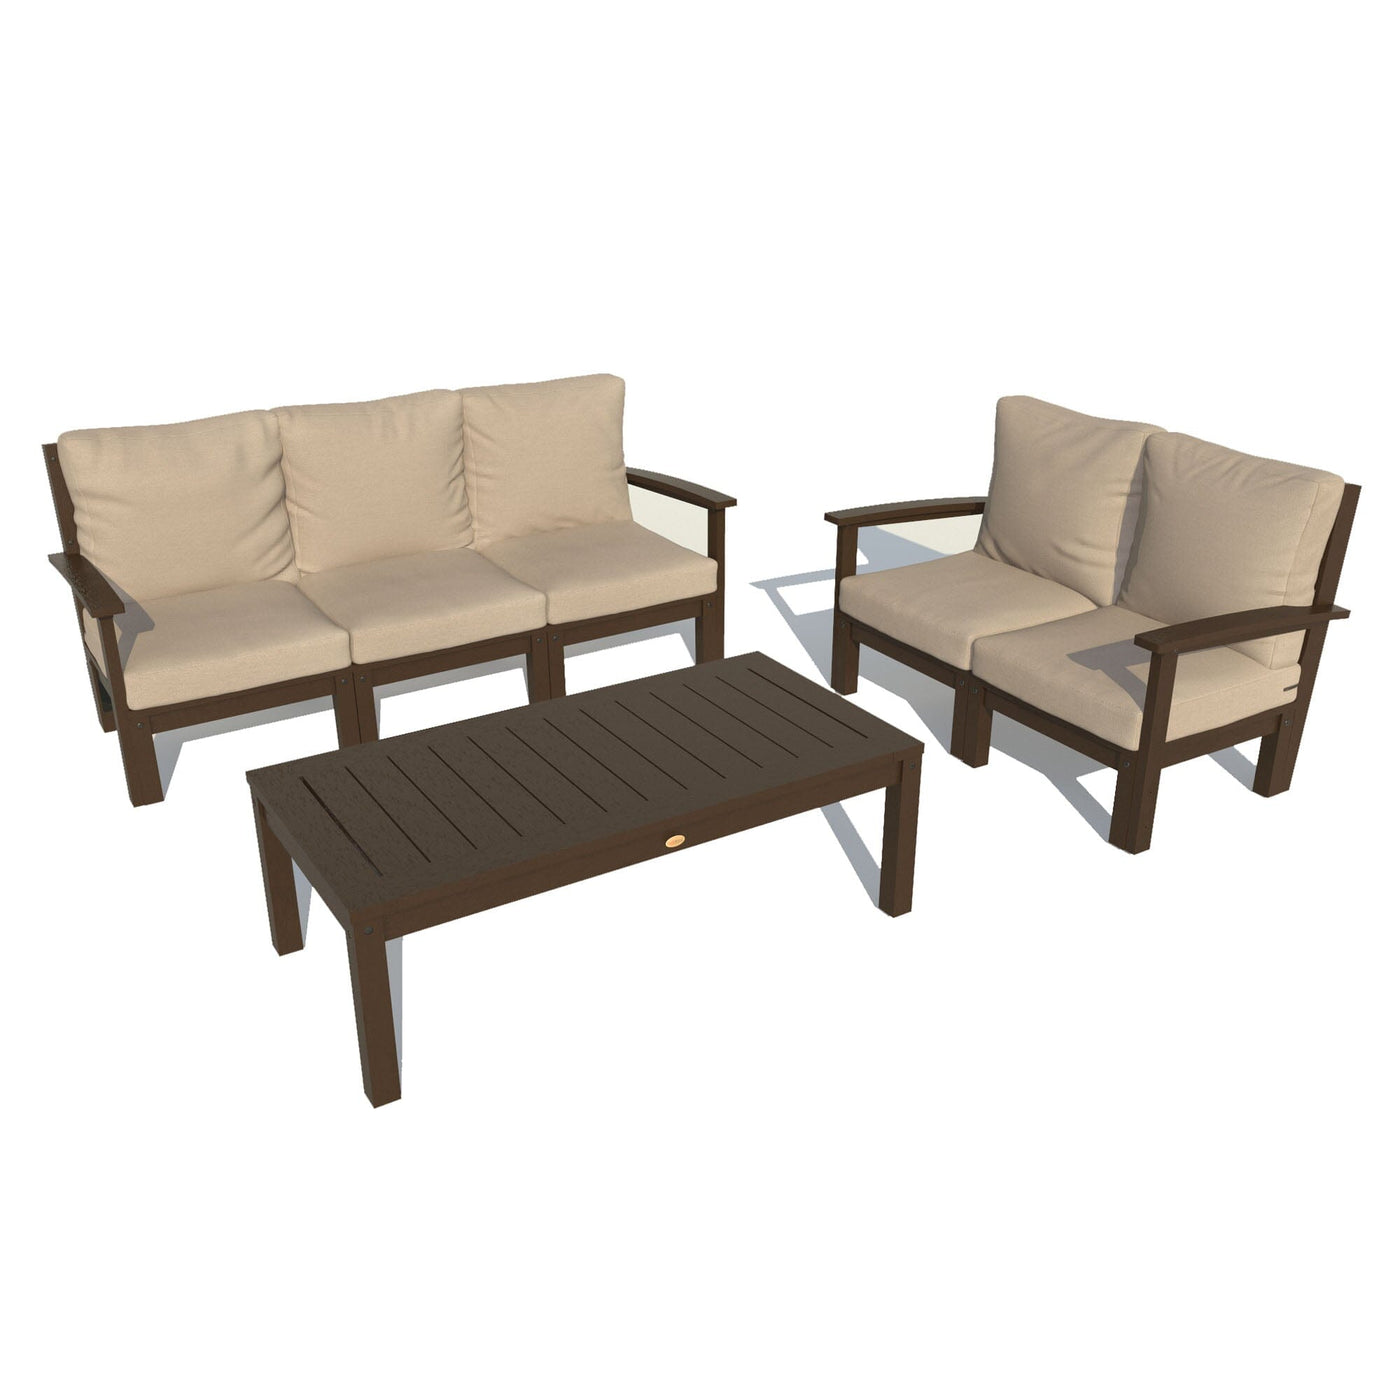 Bespoke Deep Seating: Sofa, Loveseat, and Conversation Table Deep Seating Highwood USA Driftwood Weathered Acorn 